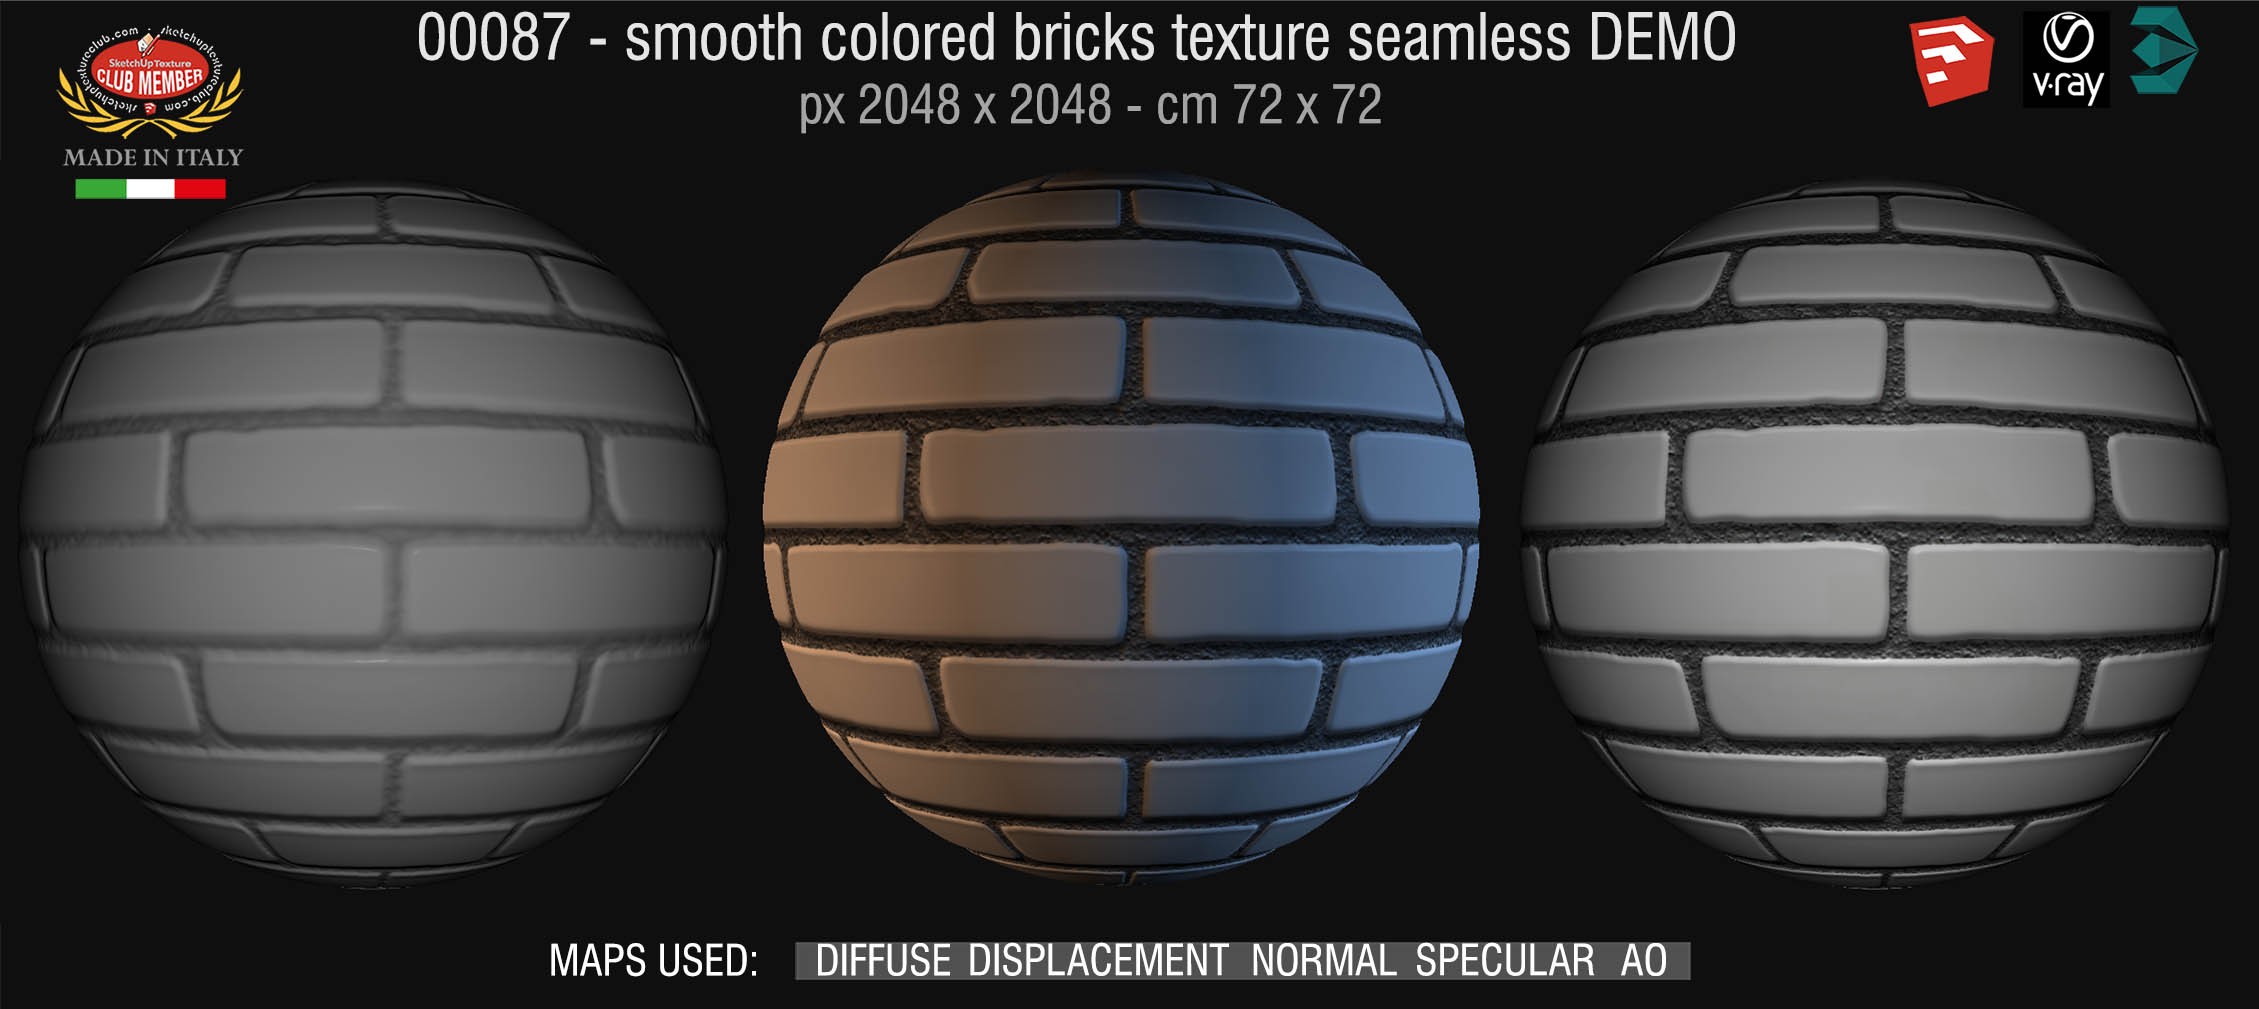 00087 smooth colored bricks texture seamless + maps DEMO